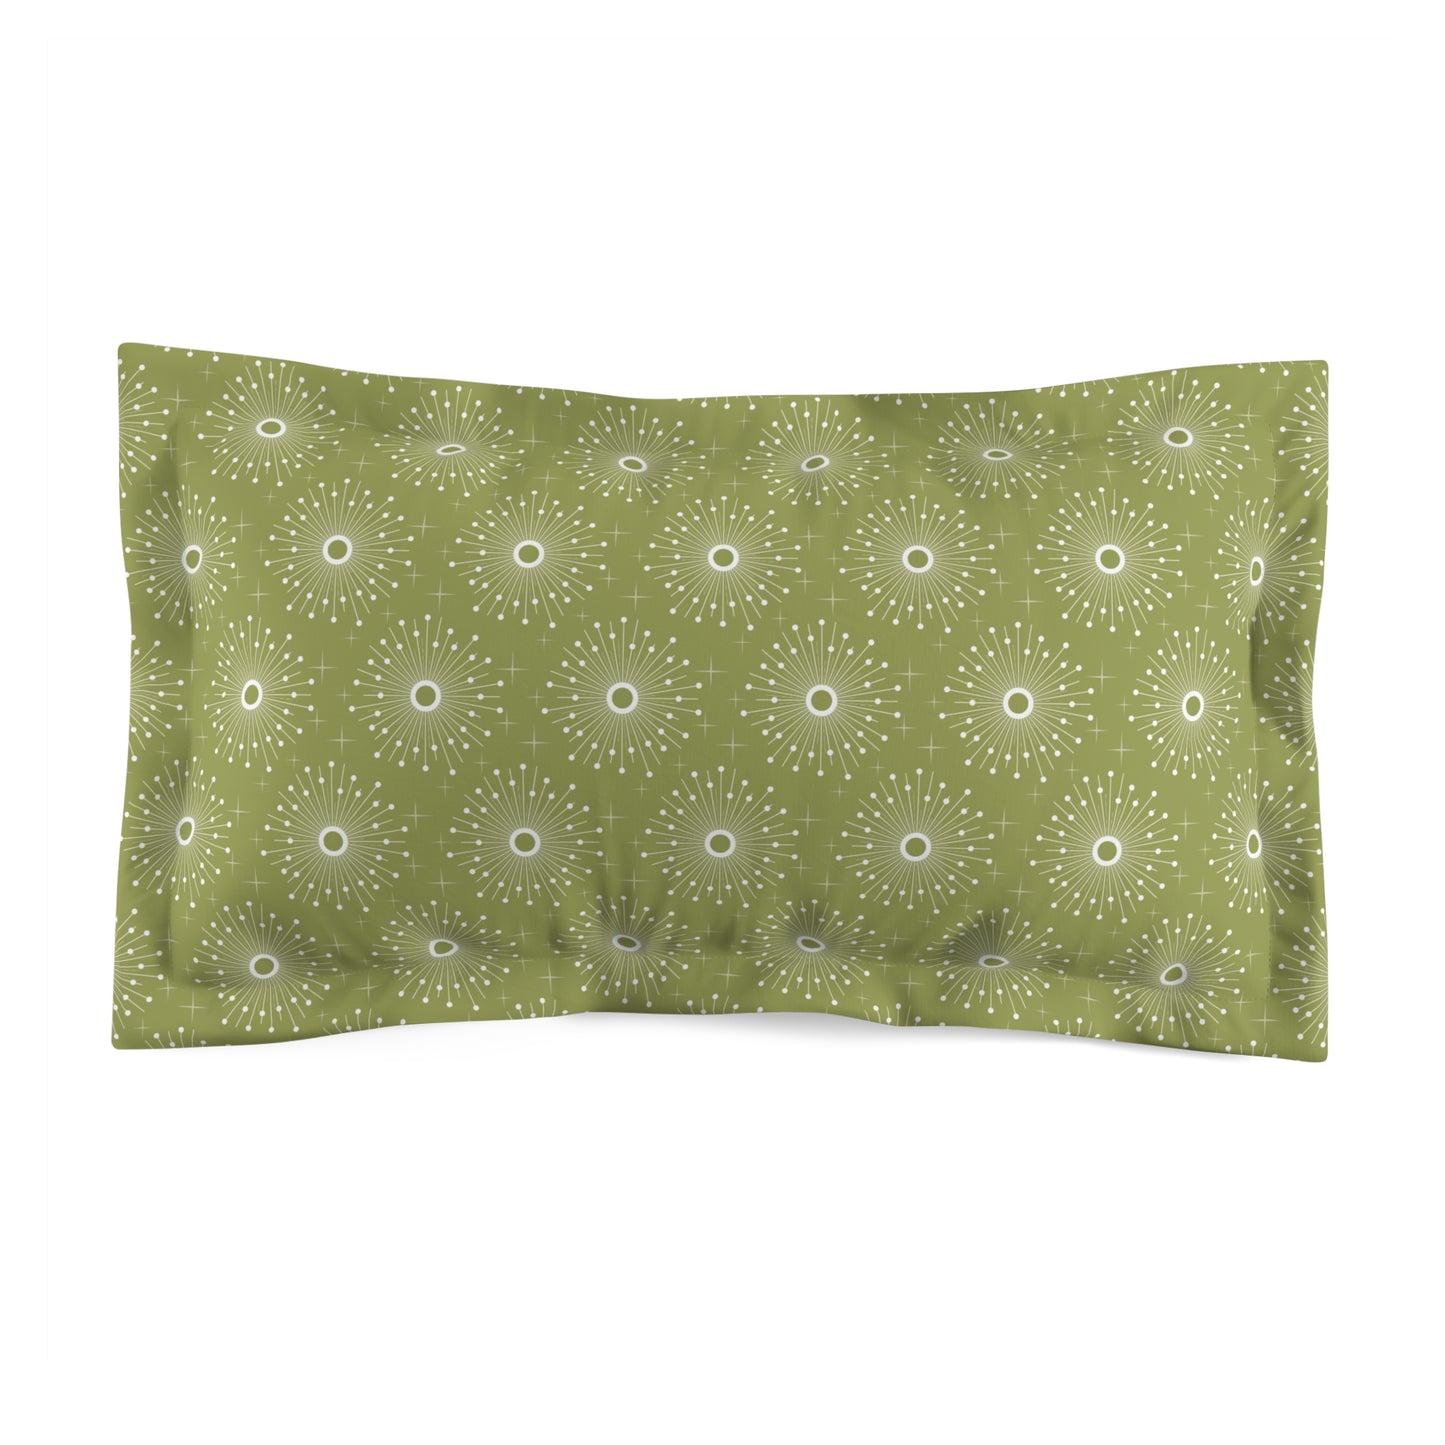 Retro 50's Atomic Bursts Mid Century Mod Green Pillow Sham